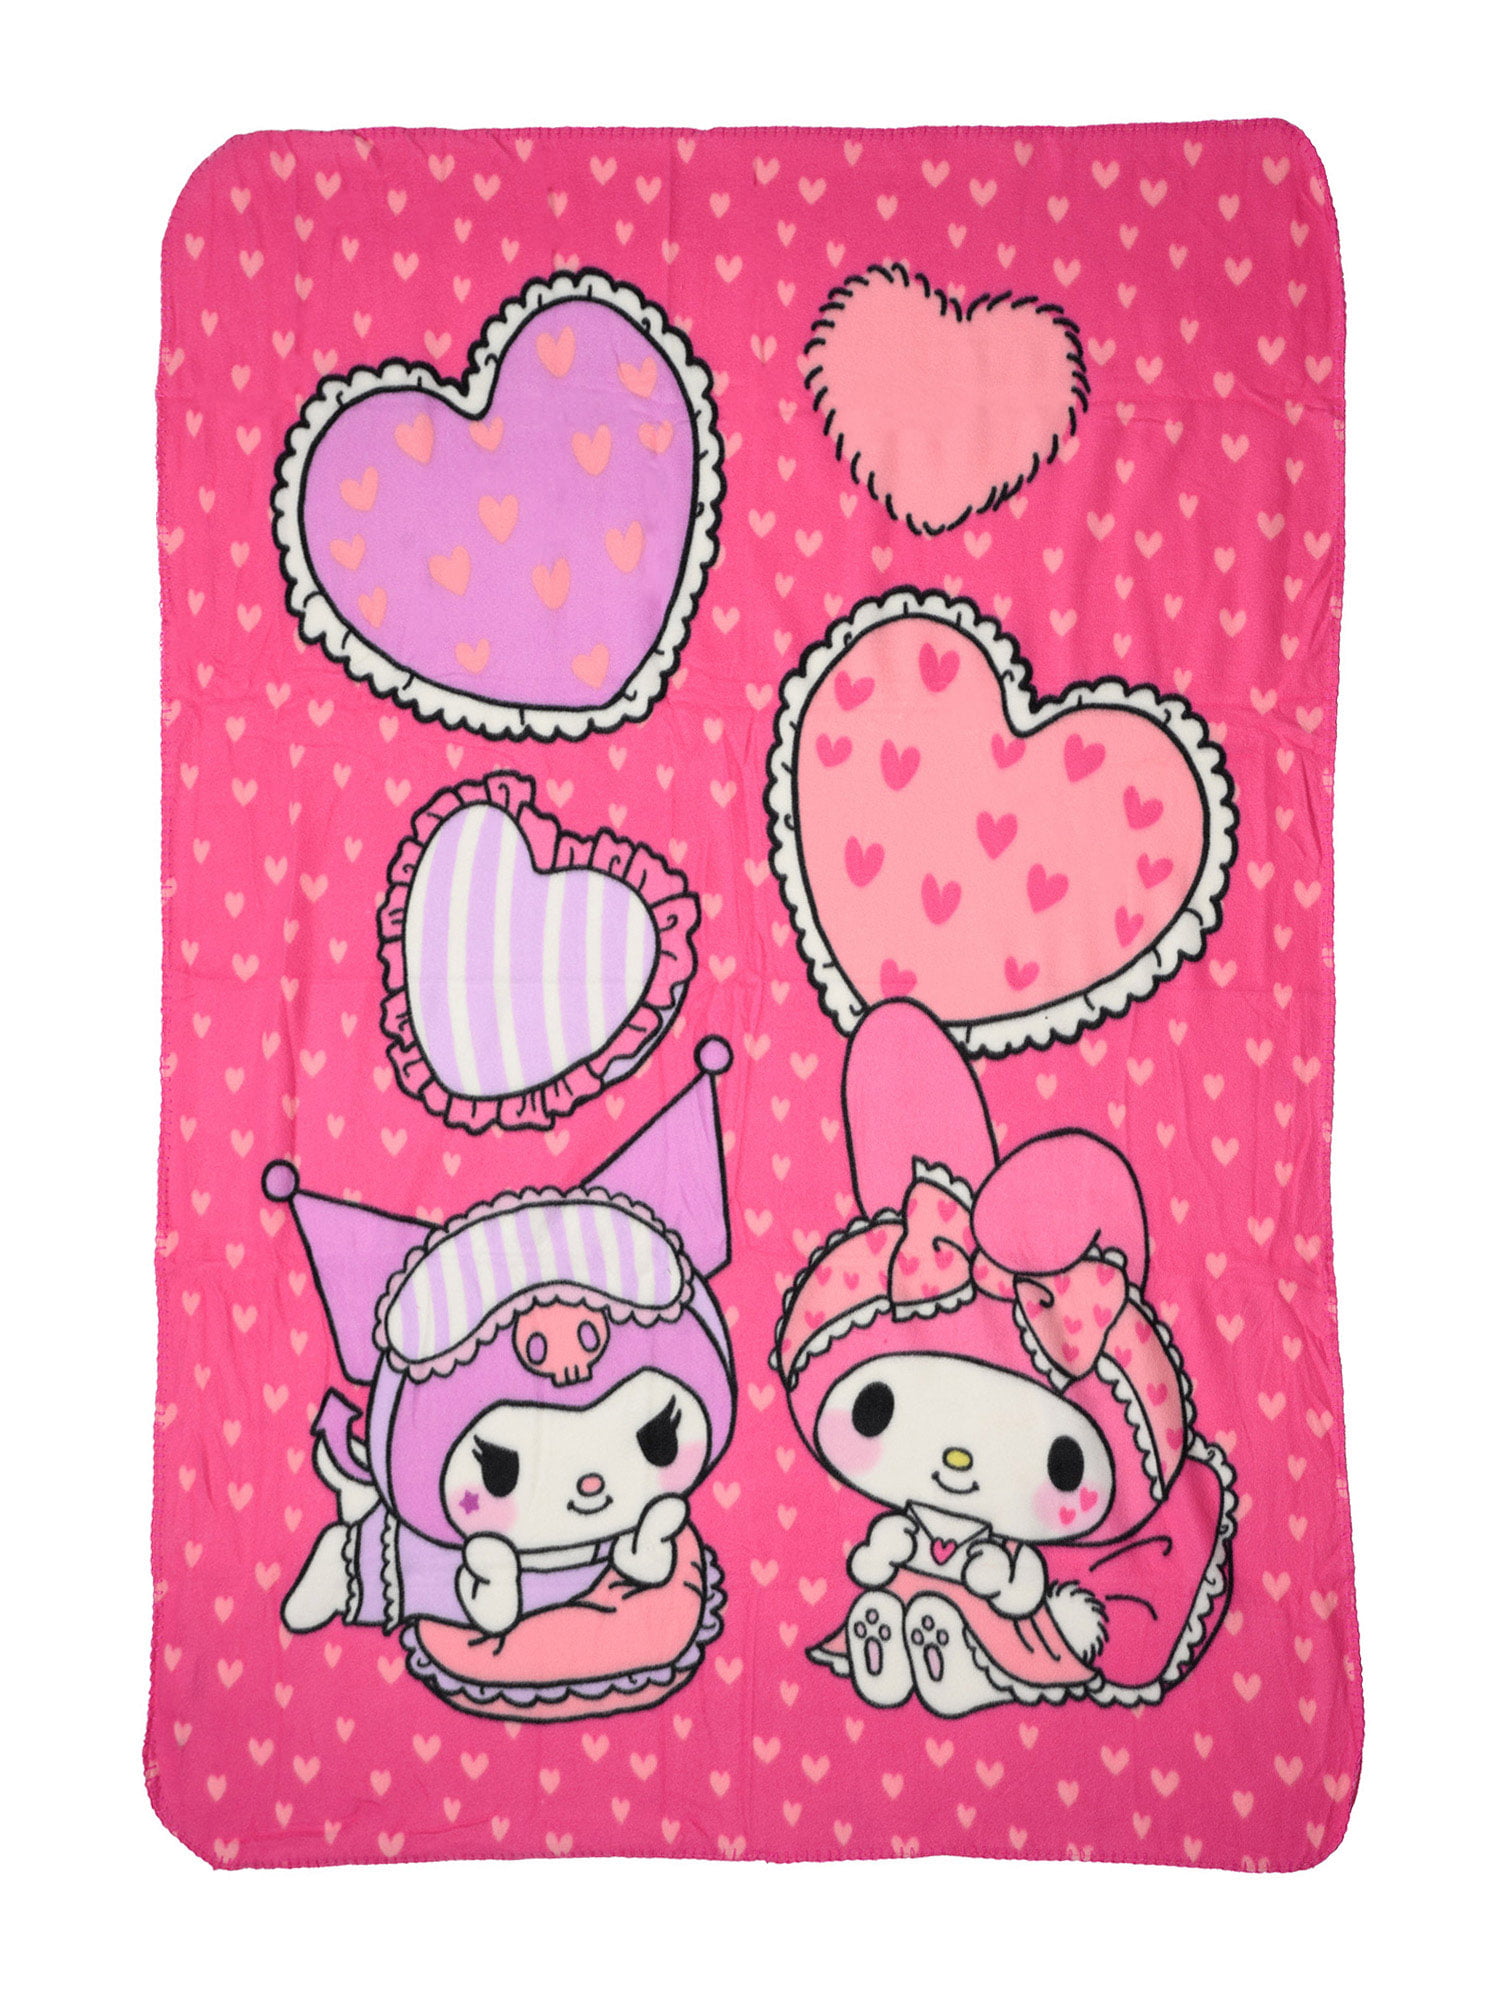 Sanrio Kuromi & My Melody Throw Blanket 45 x 60 Pink Hearts Girls